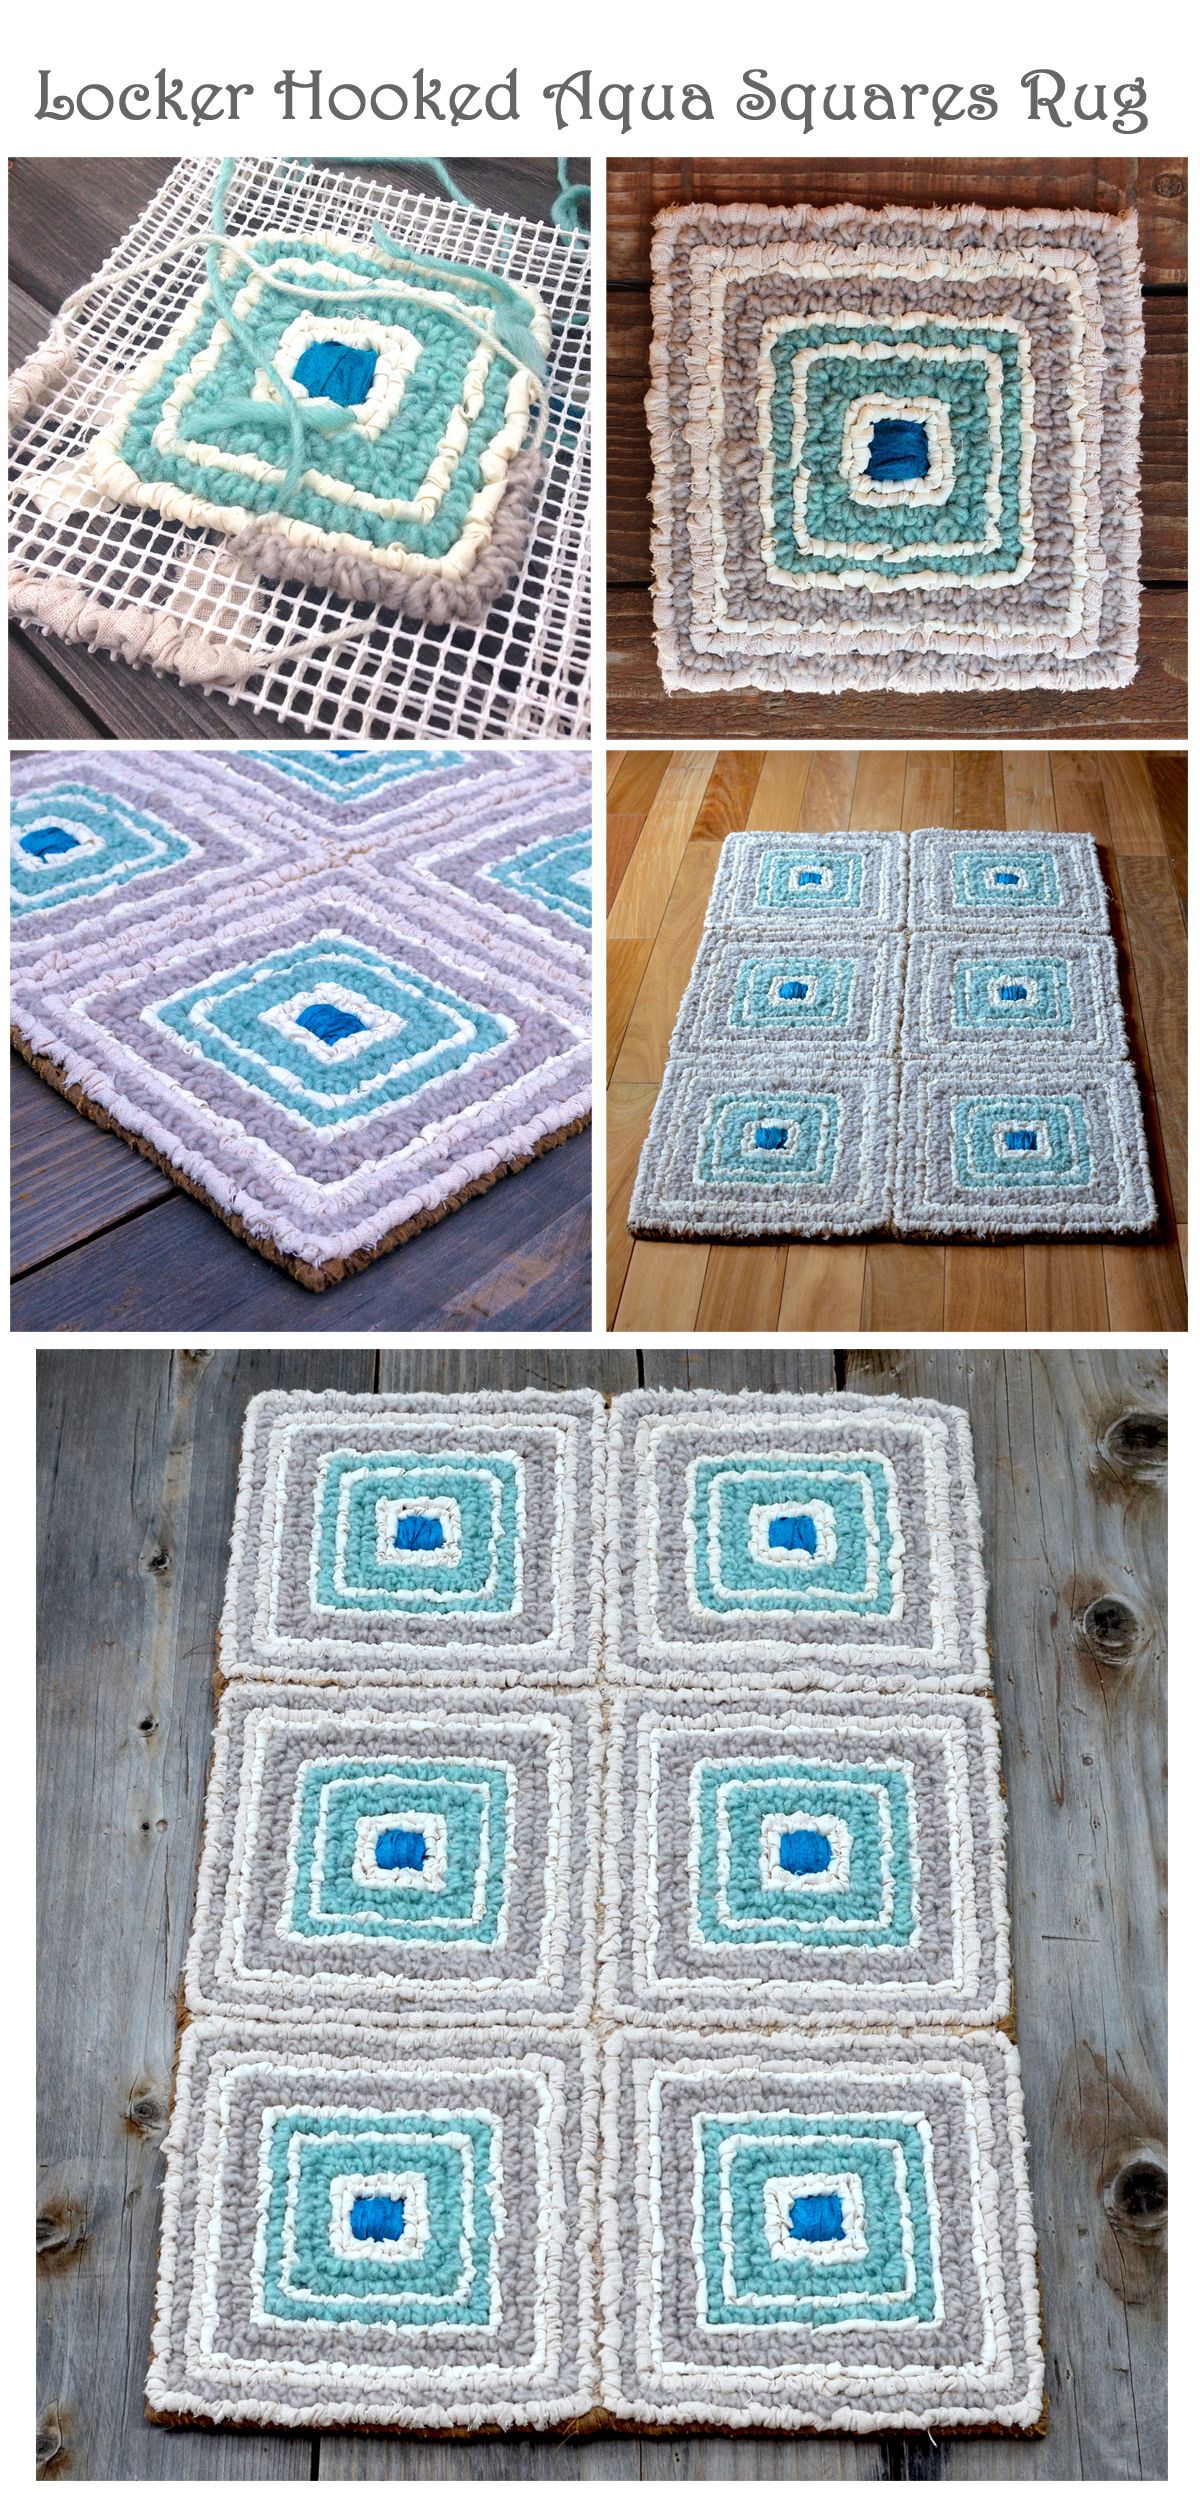 rug hooking with yarn tutorial